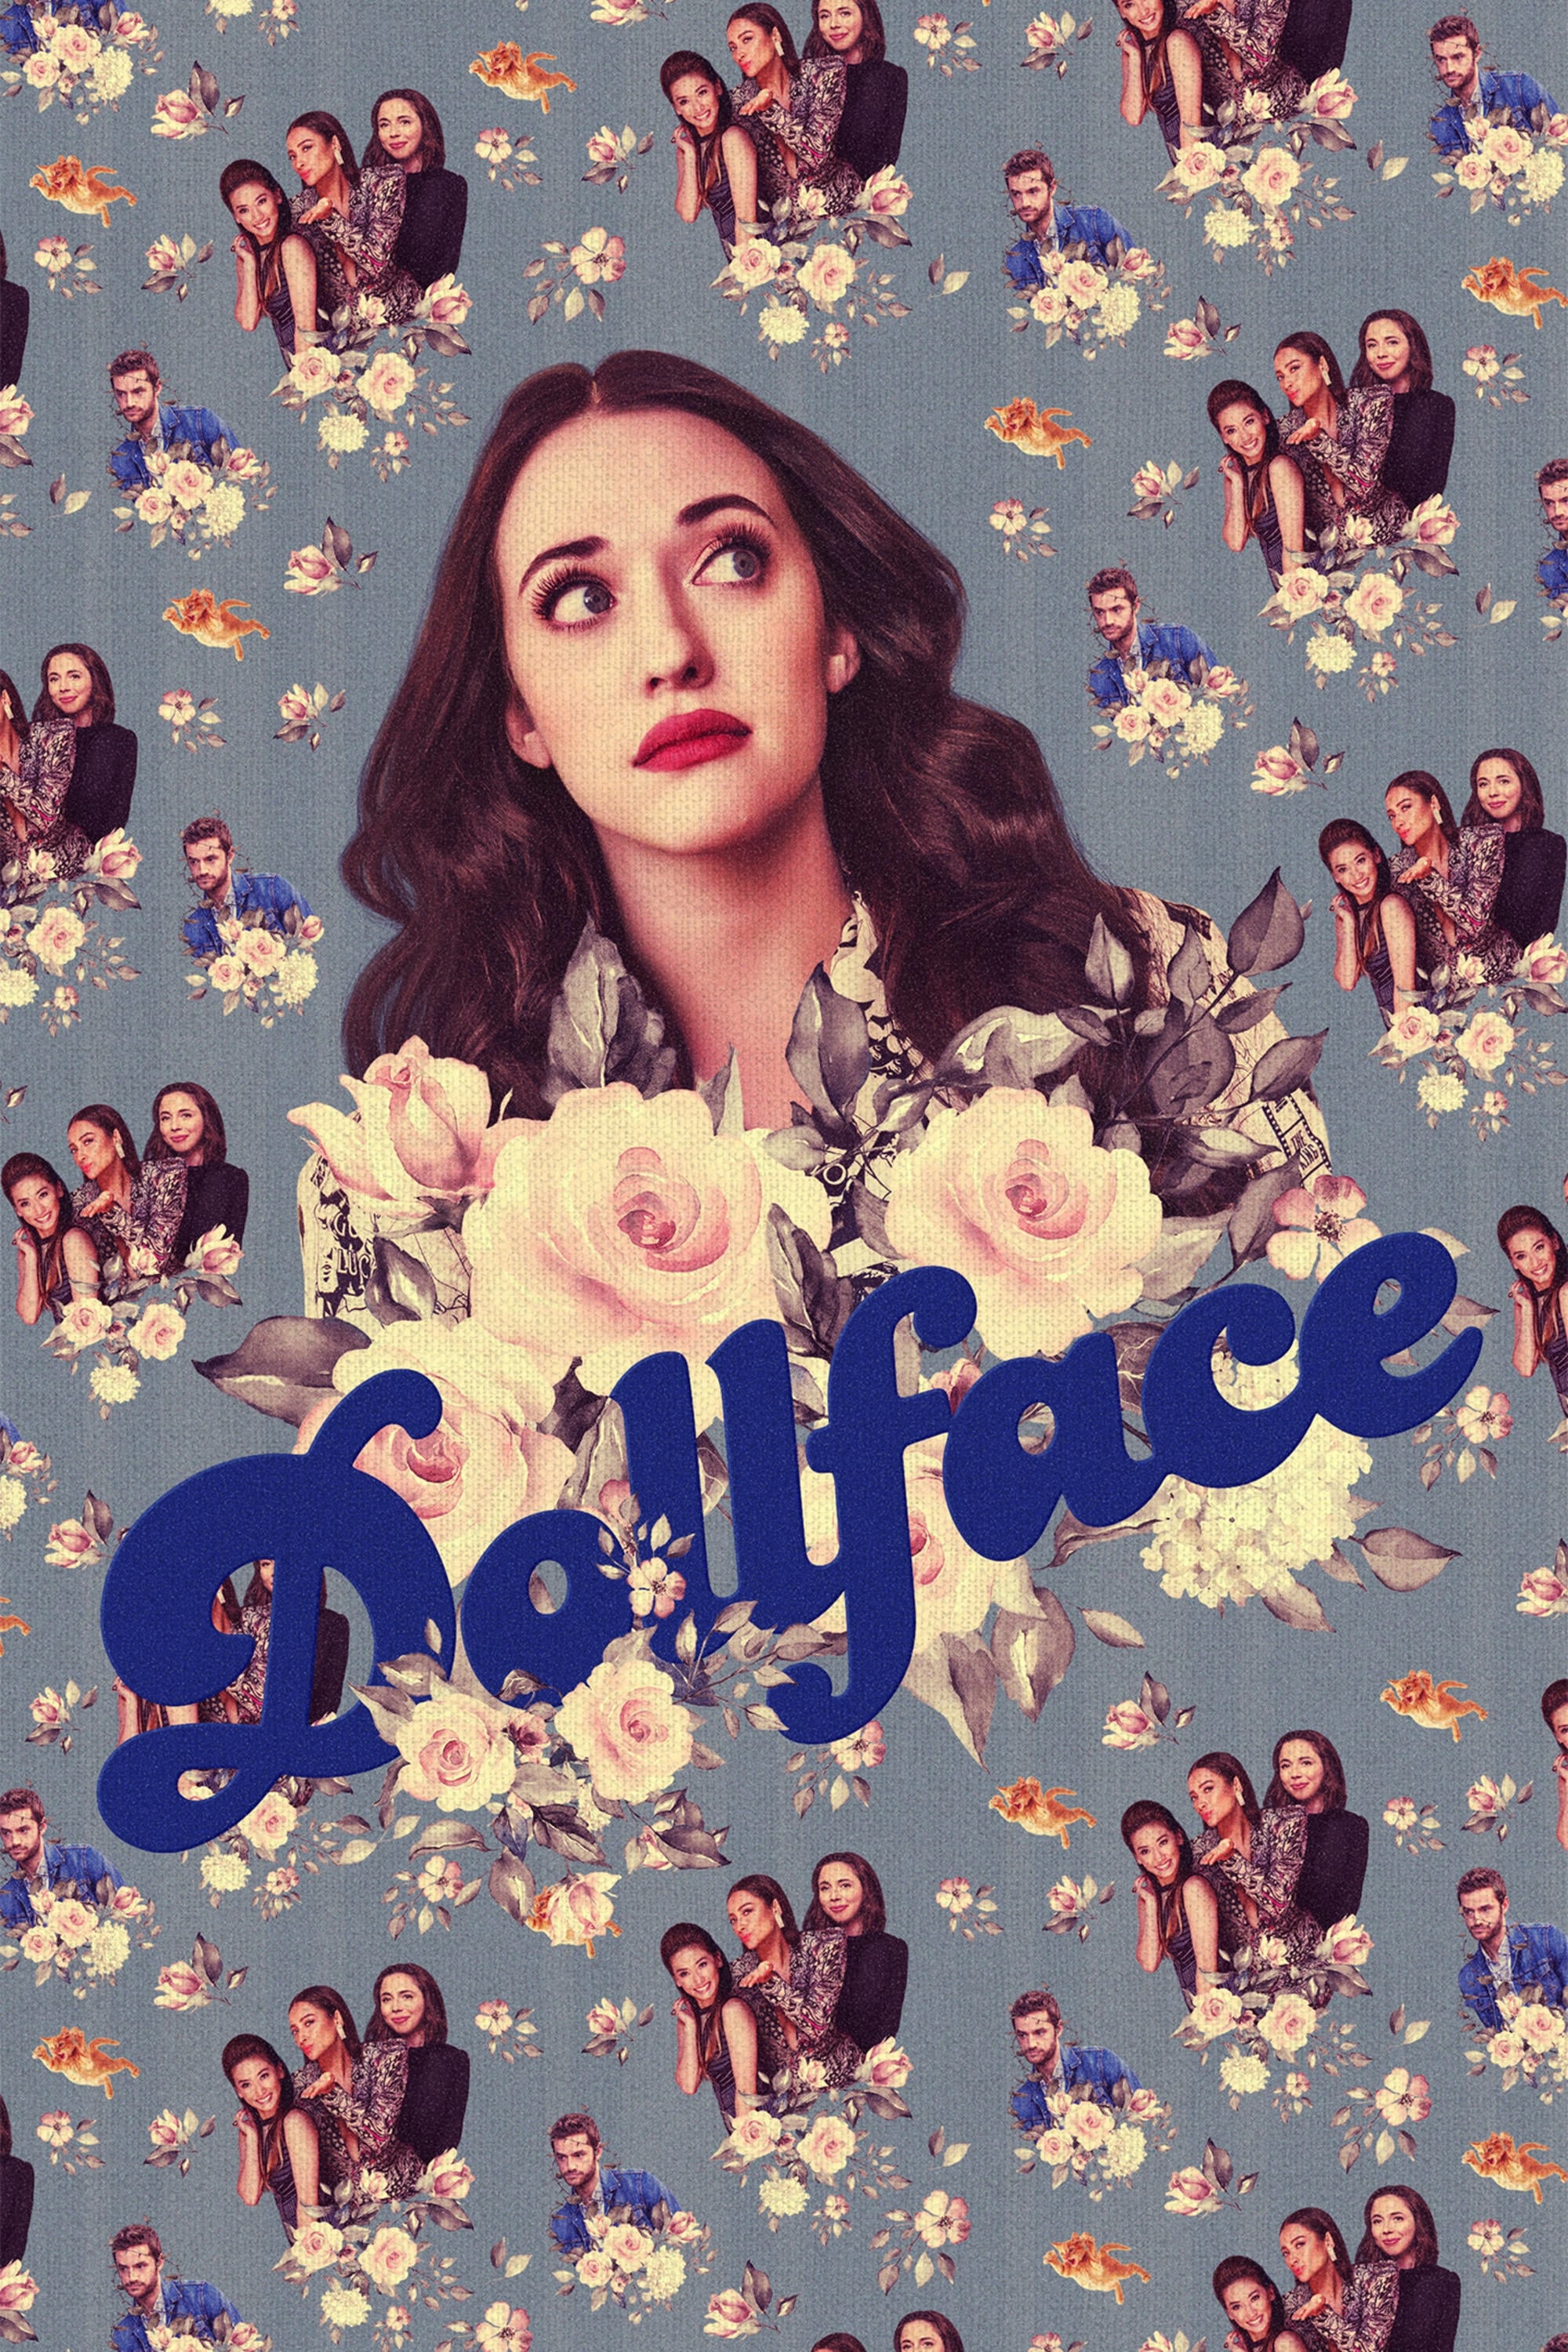 Dolllface Dollface Definition